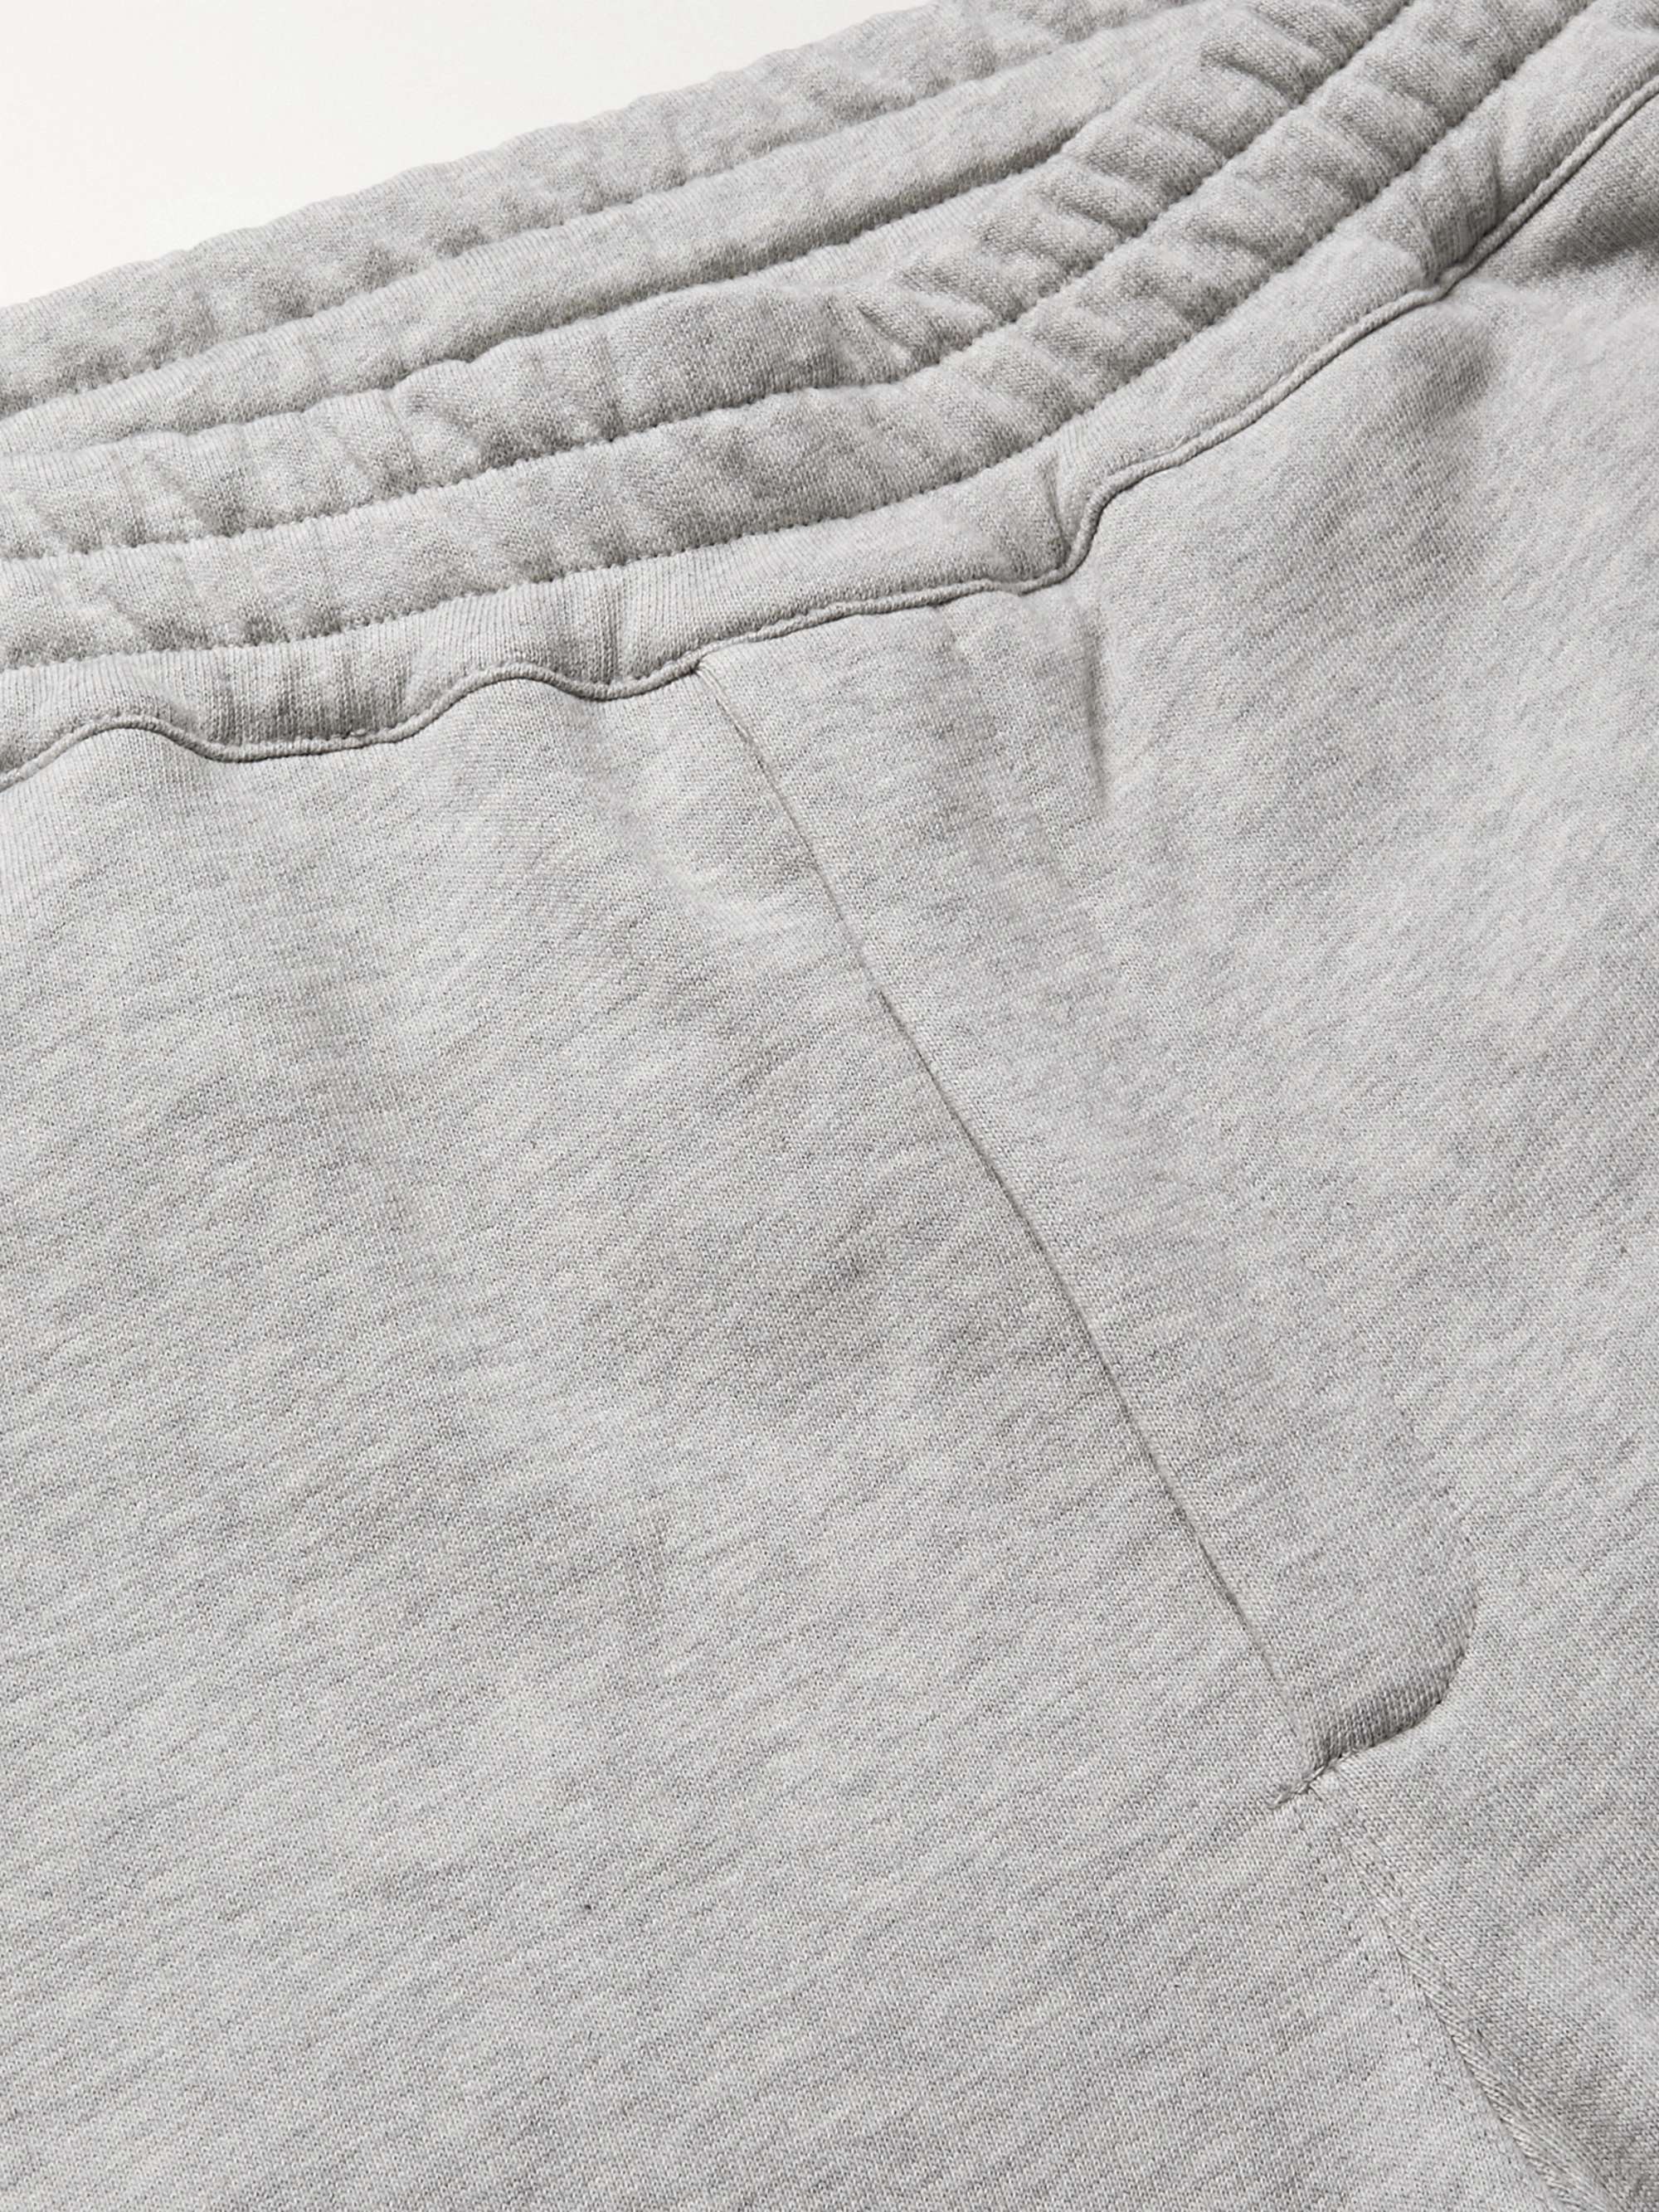 ALEXANDER MCQUEEN Tapered Logo-Print Loopback Cotton-Jersey Sweatpants